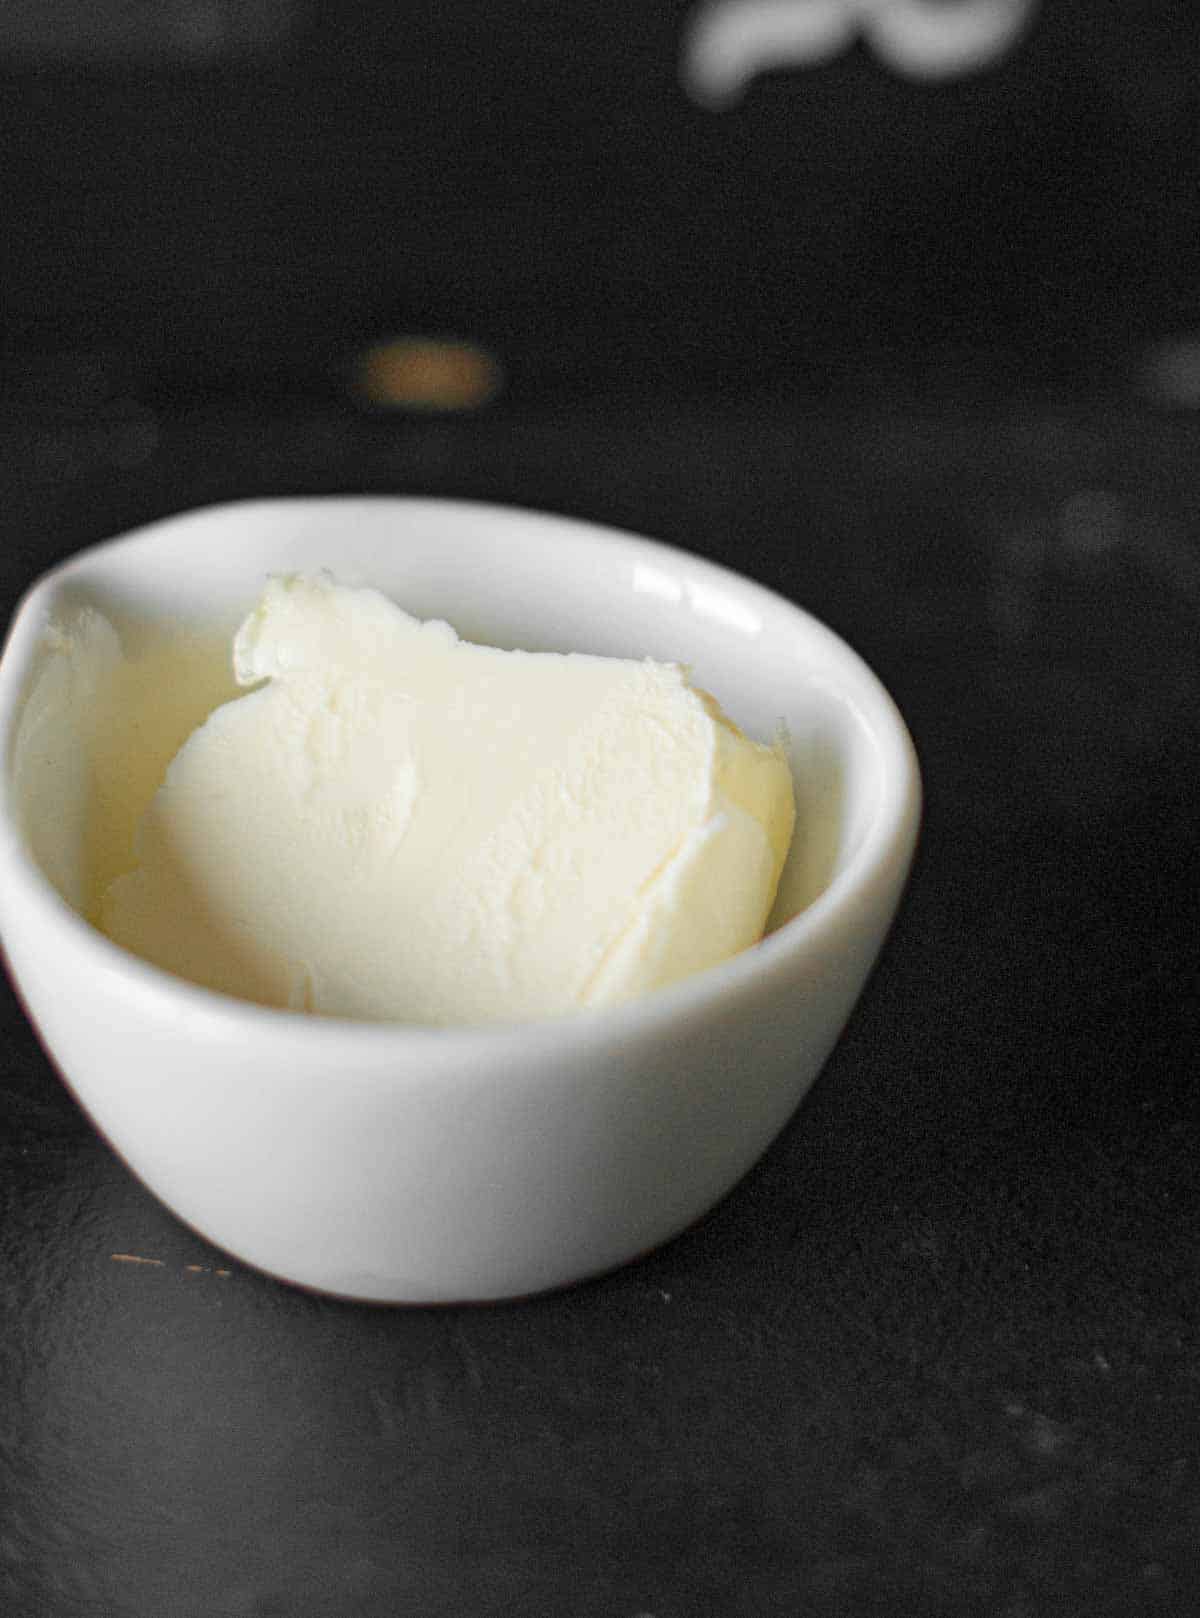 image of the margarine